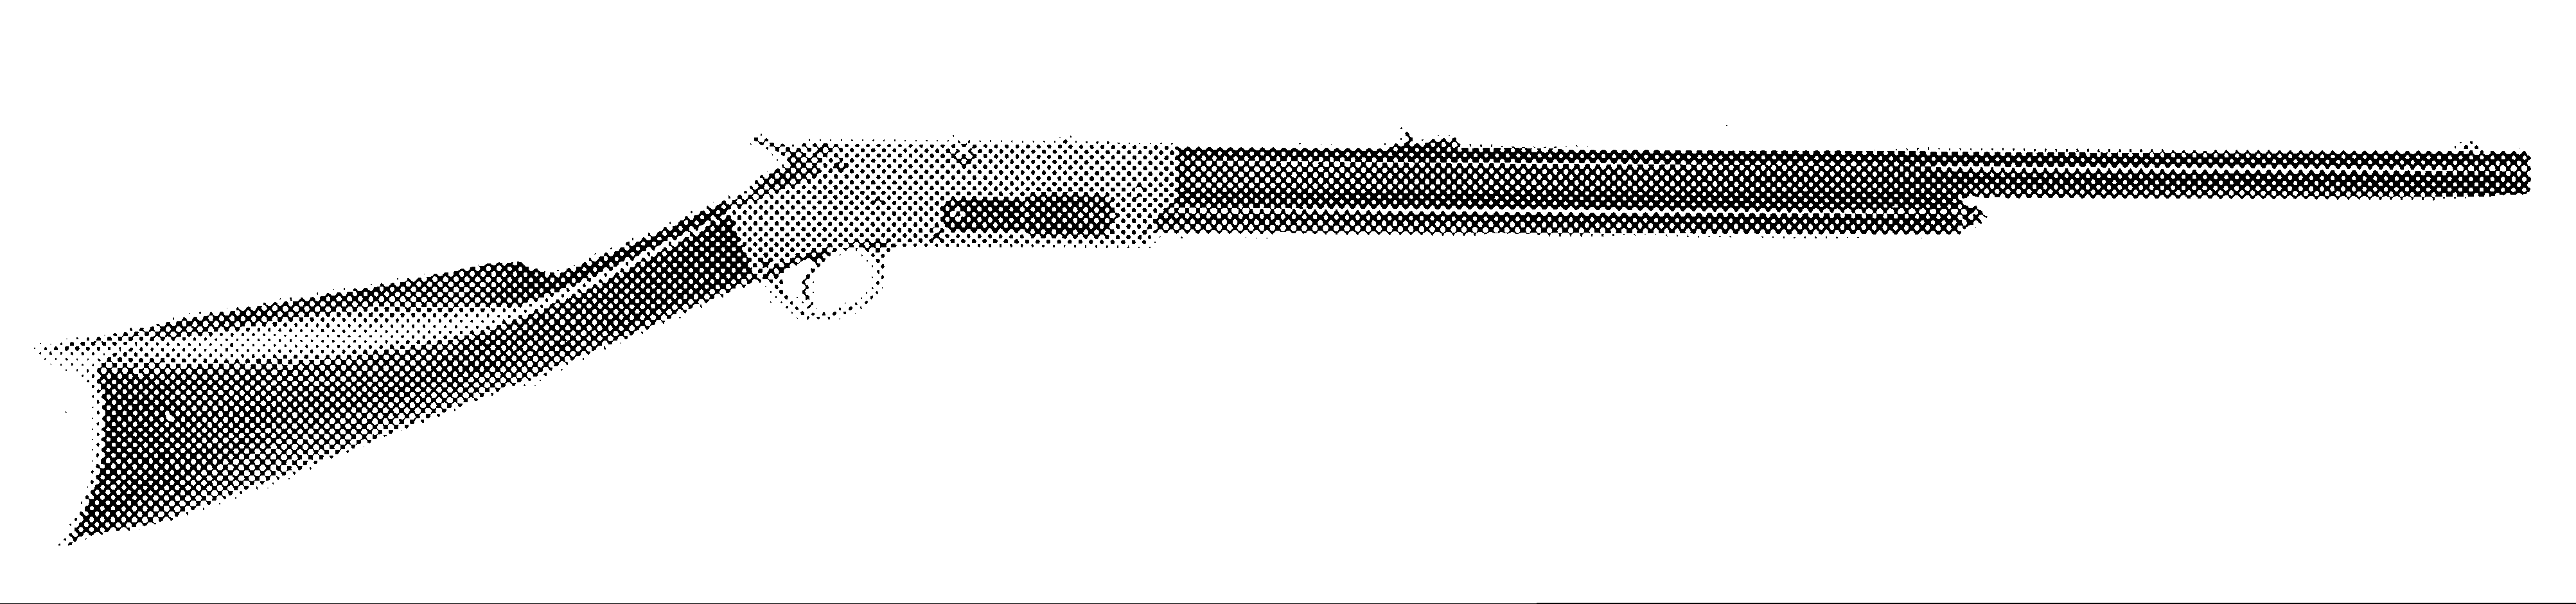 Orvil M. Robinson Patent Rifle